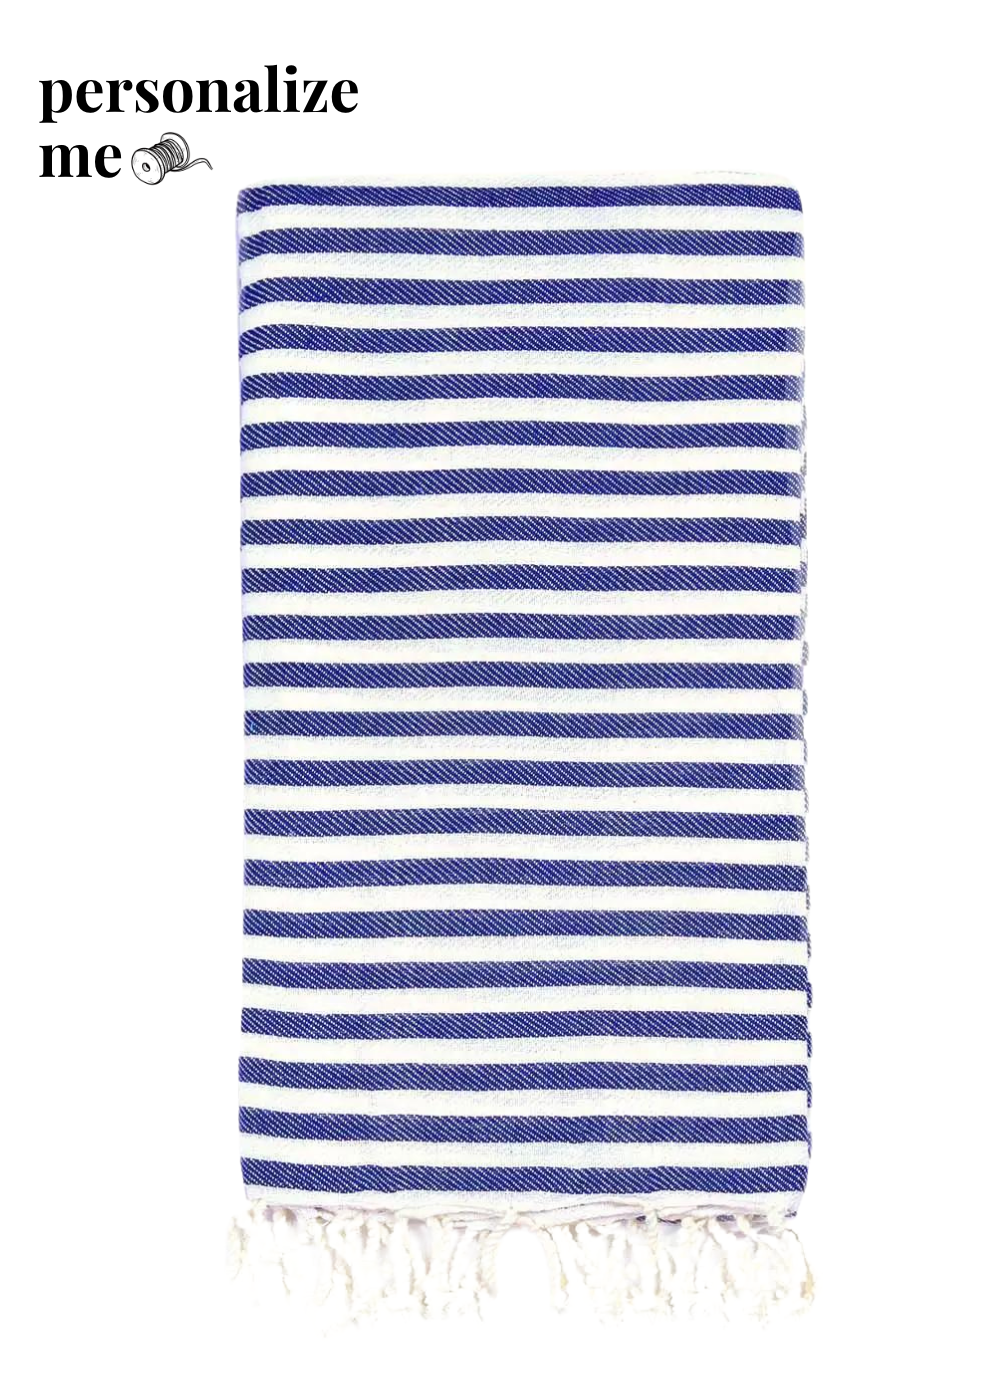 Beach Candy Towel - Navy